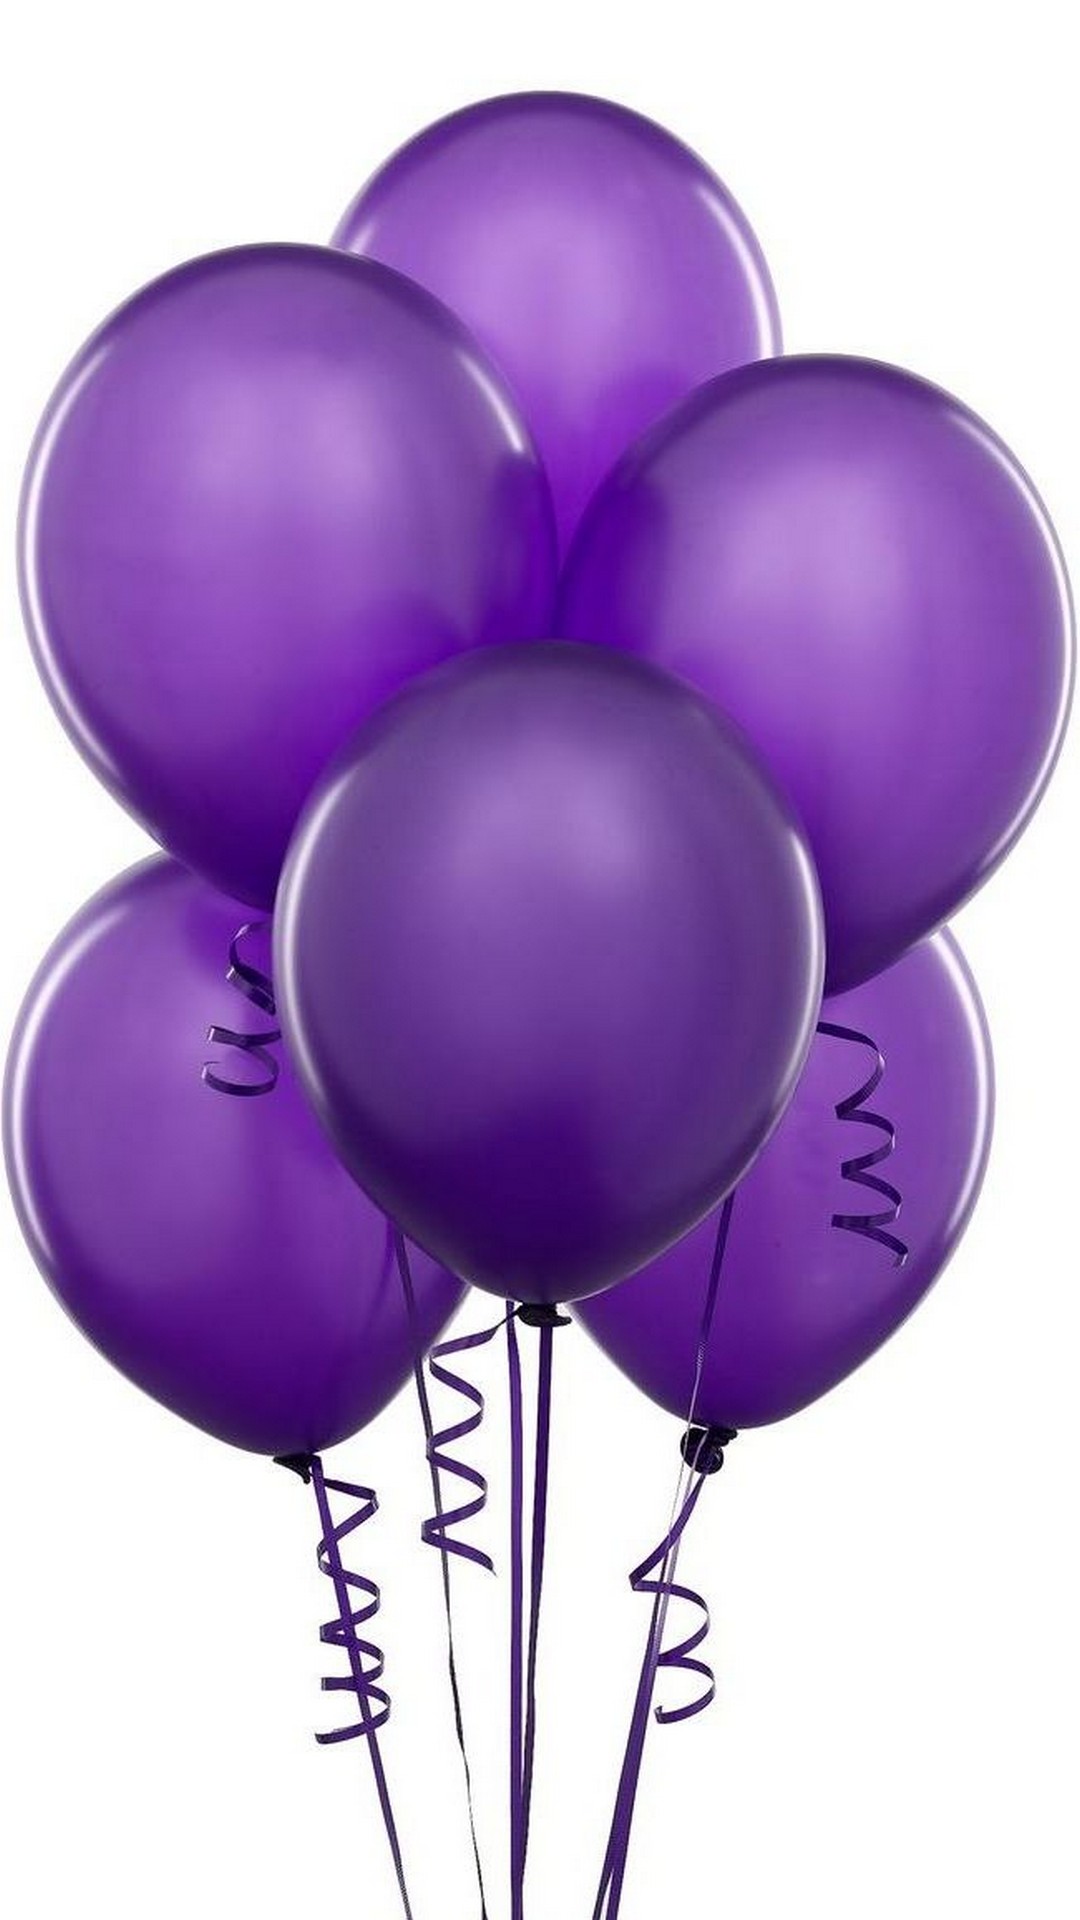 Purple Ballons iPhone Wallpaper